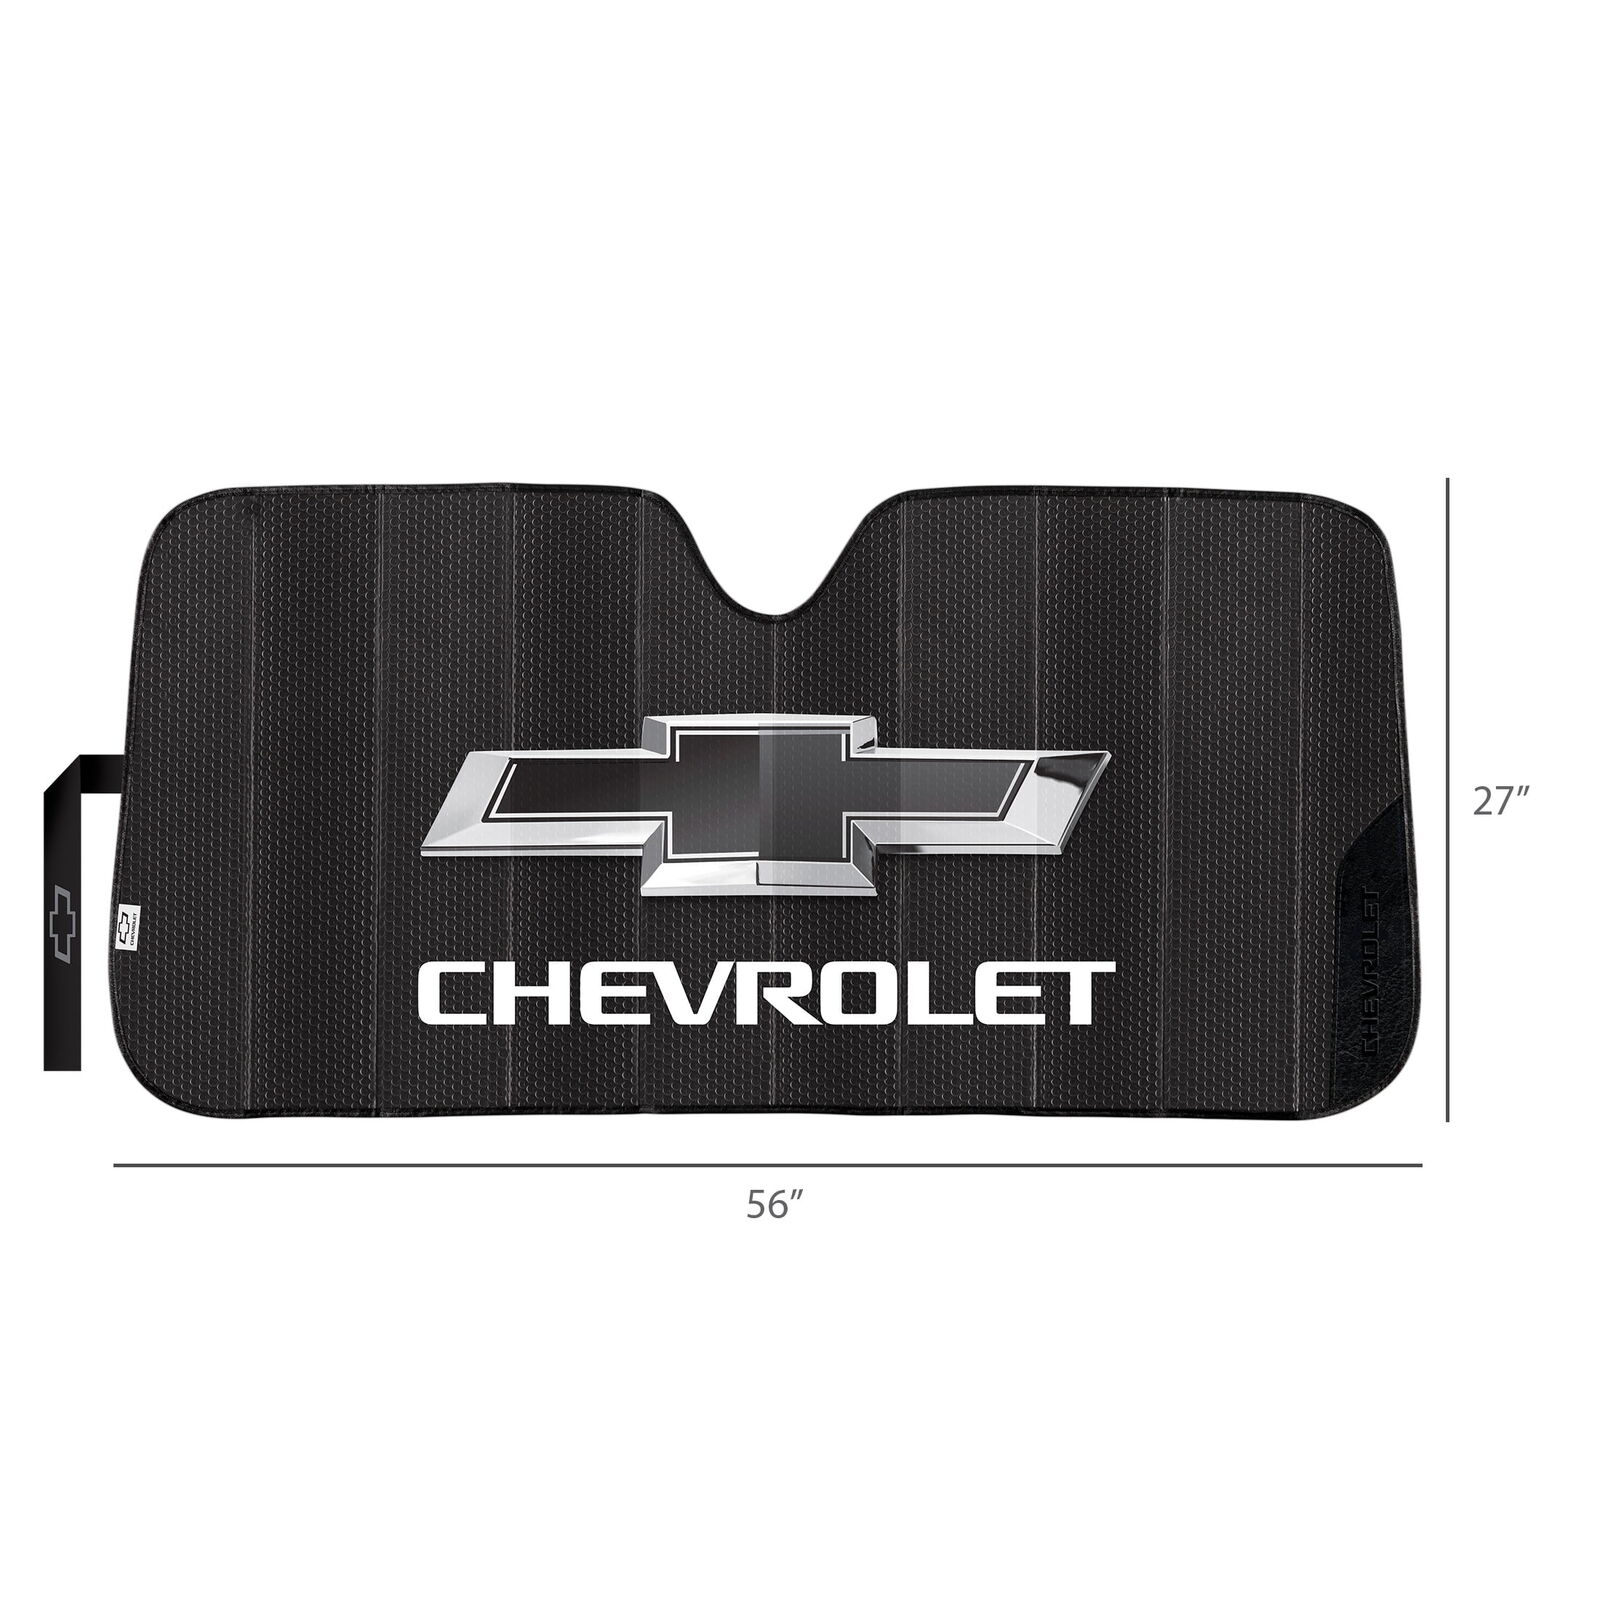 Chevy Universal Fit Accordion Auto Sunshade, Black, 58” x 27.5”, 1 Piece